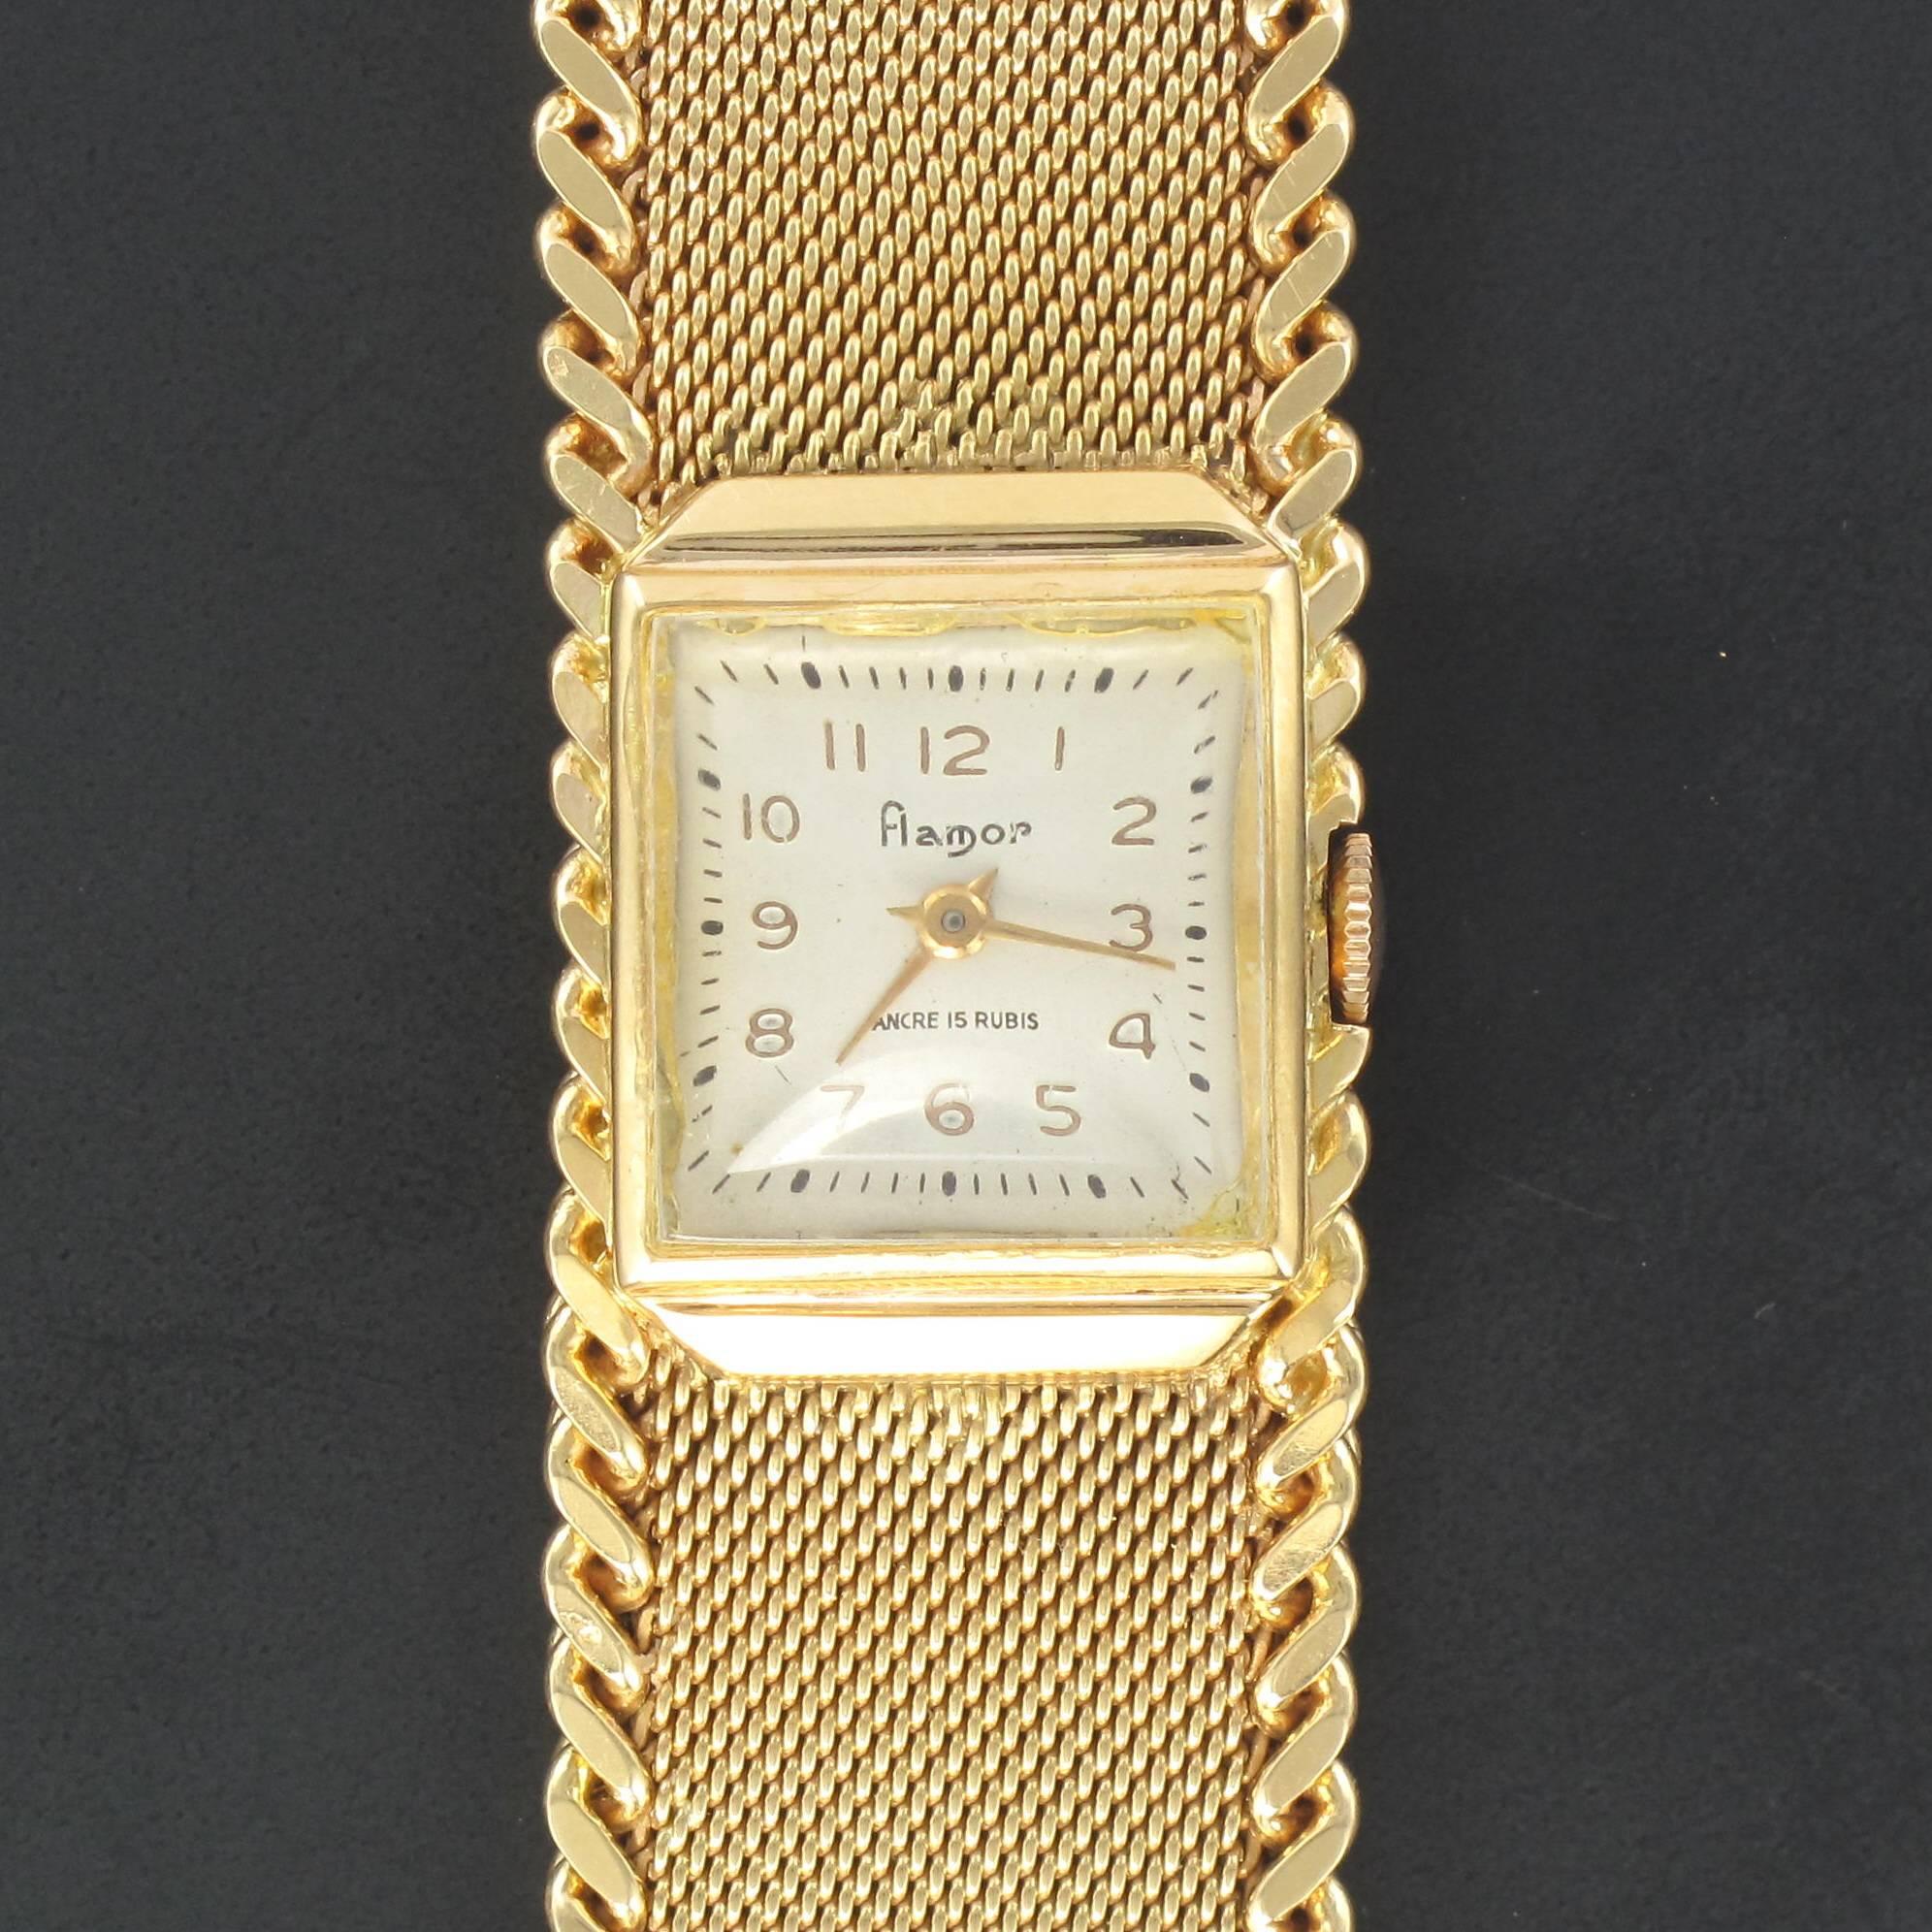 Flamor Ladies Yellow Gold Manual Wind Wristwatch 1